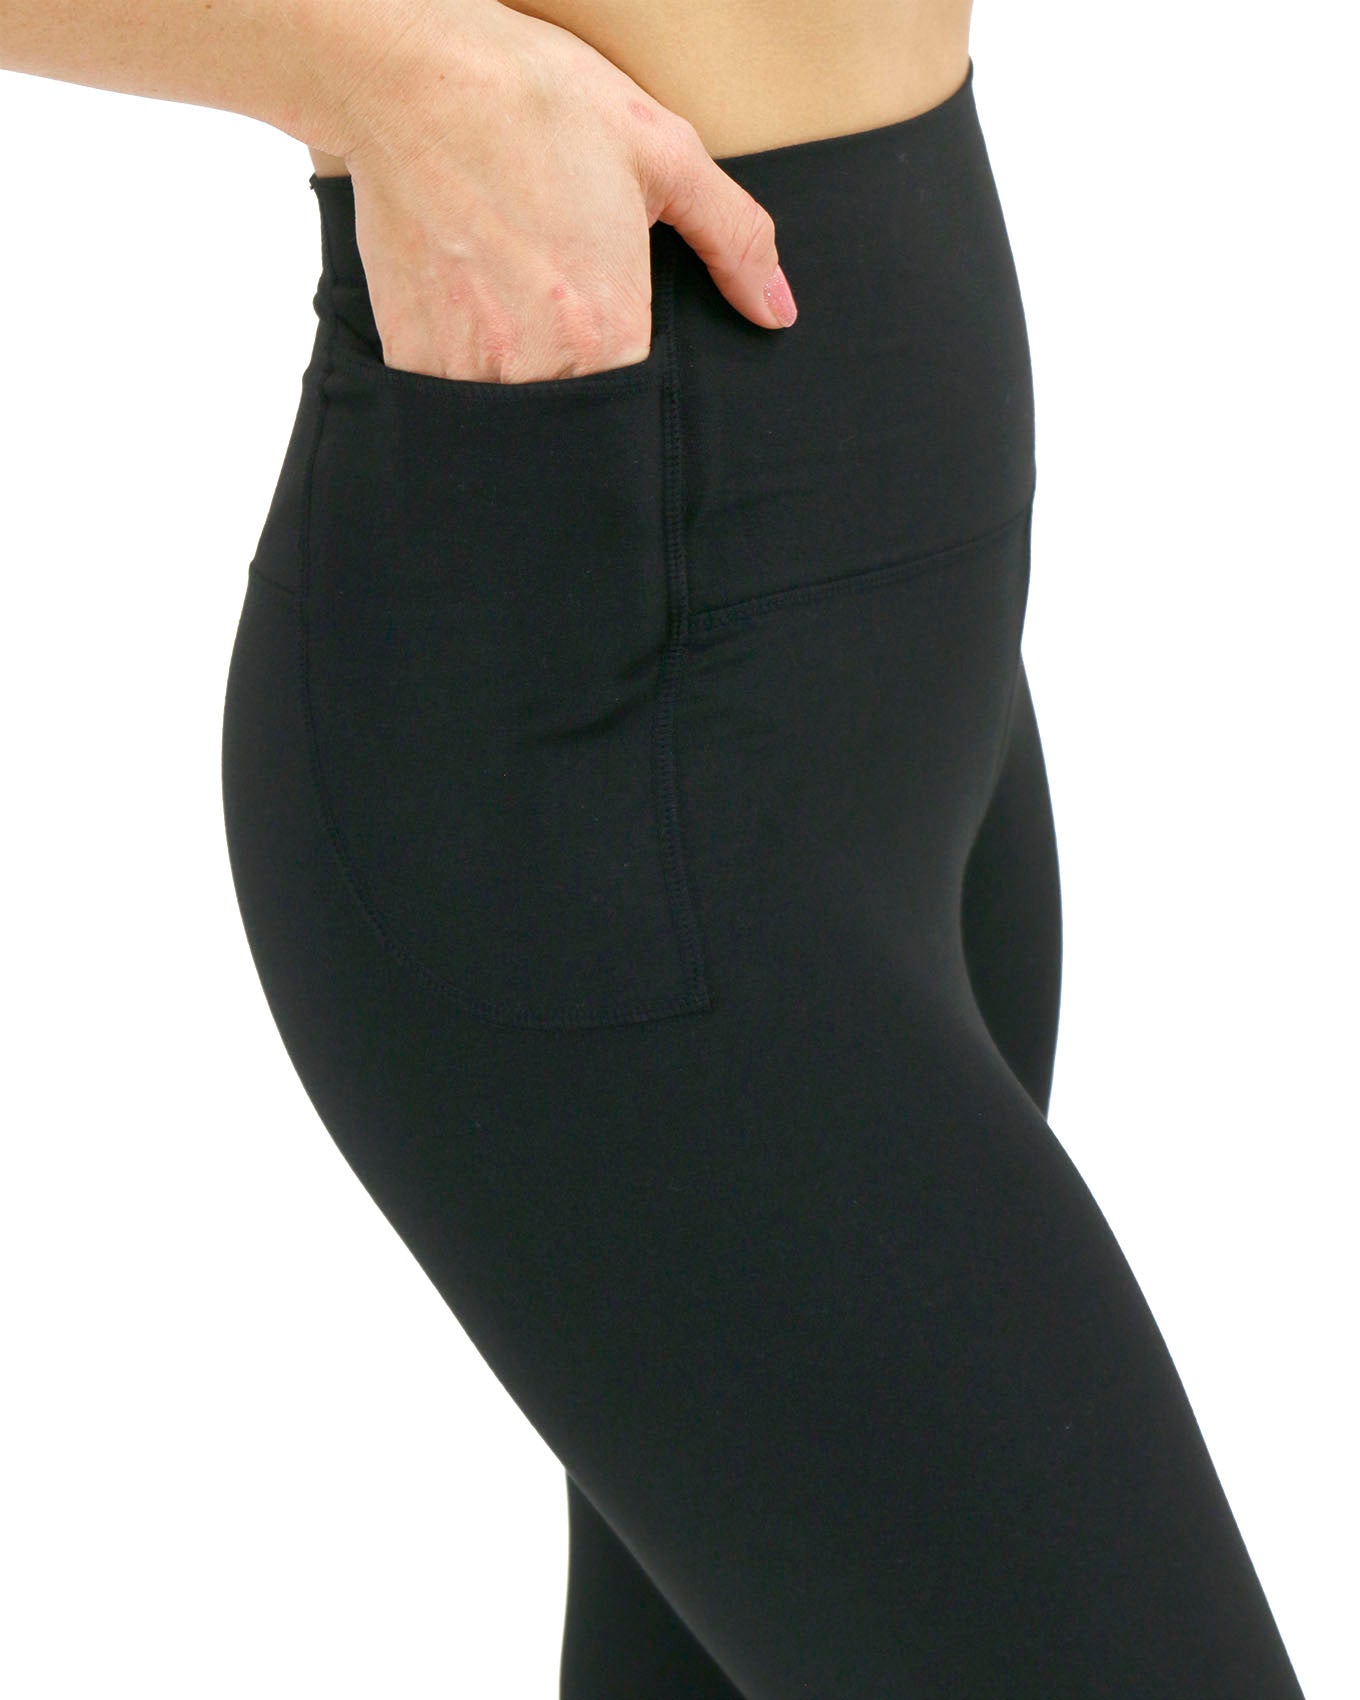 Buy VOGUEMAX Women's Capri Leggings High Waist Soft Cropped Leggings Tights  3/4 Length Leggings Dark Grey at Amazon.in